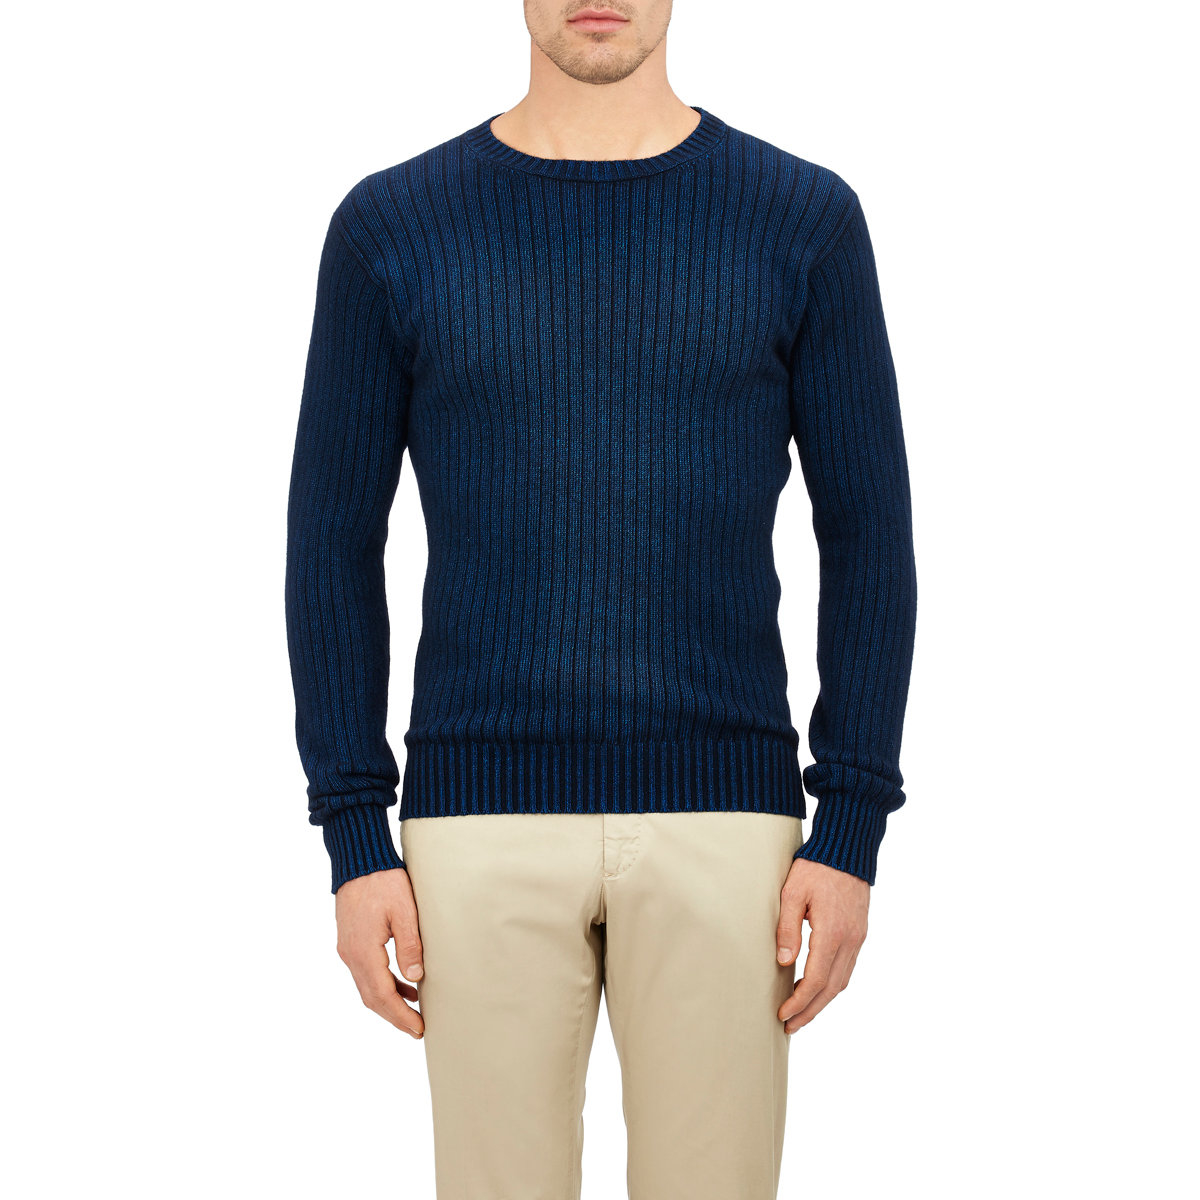 New 2015 Sweater Men Pullover Men brand Turtleneck Winter